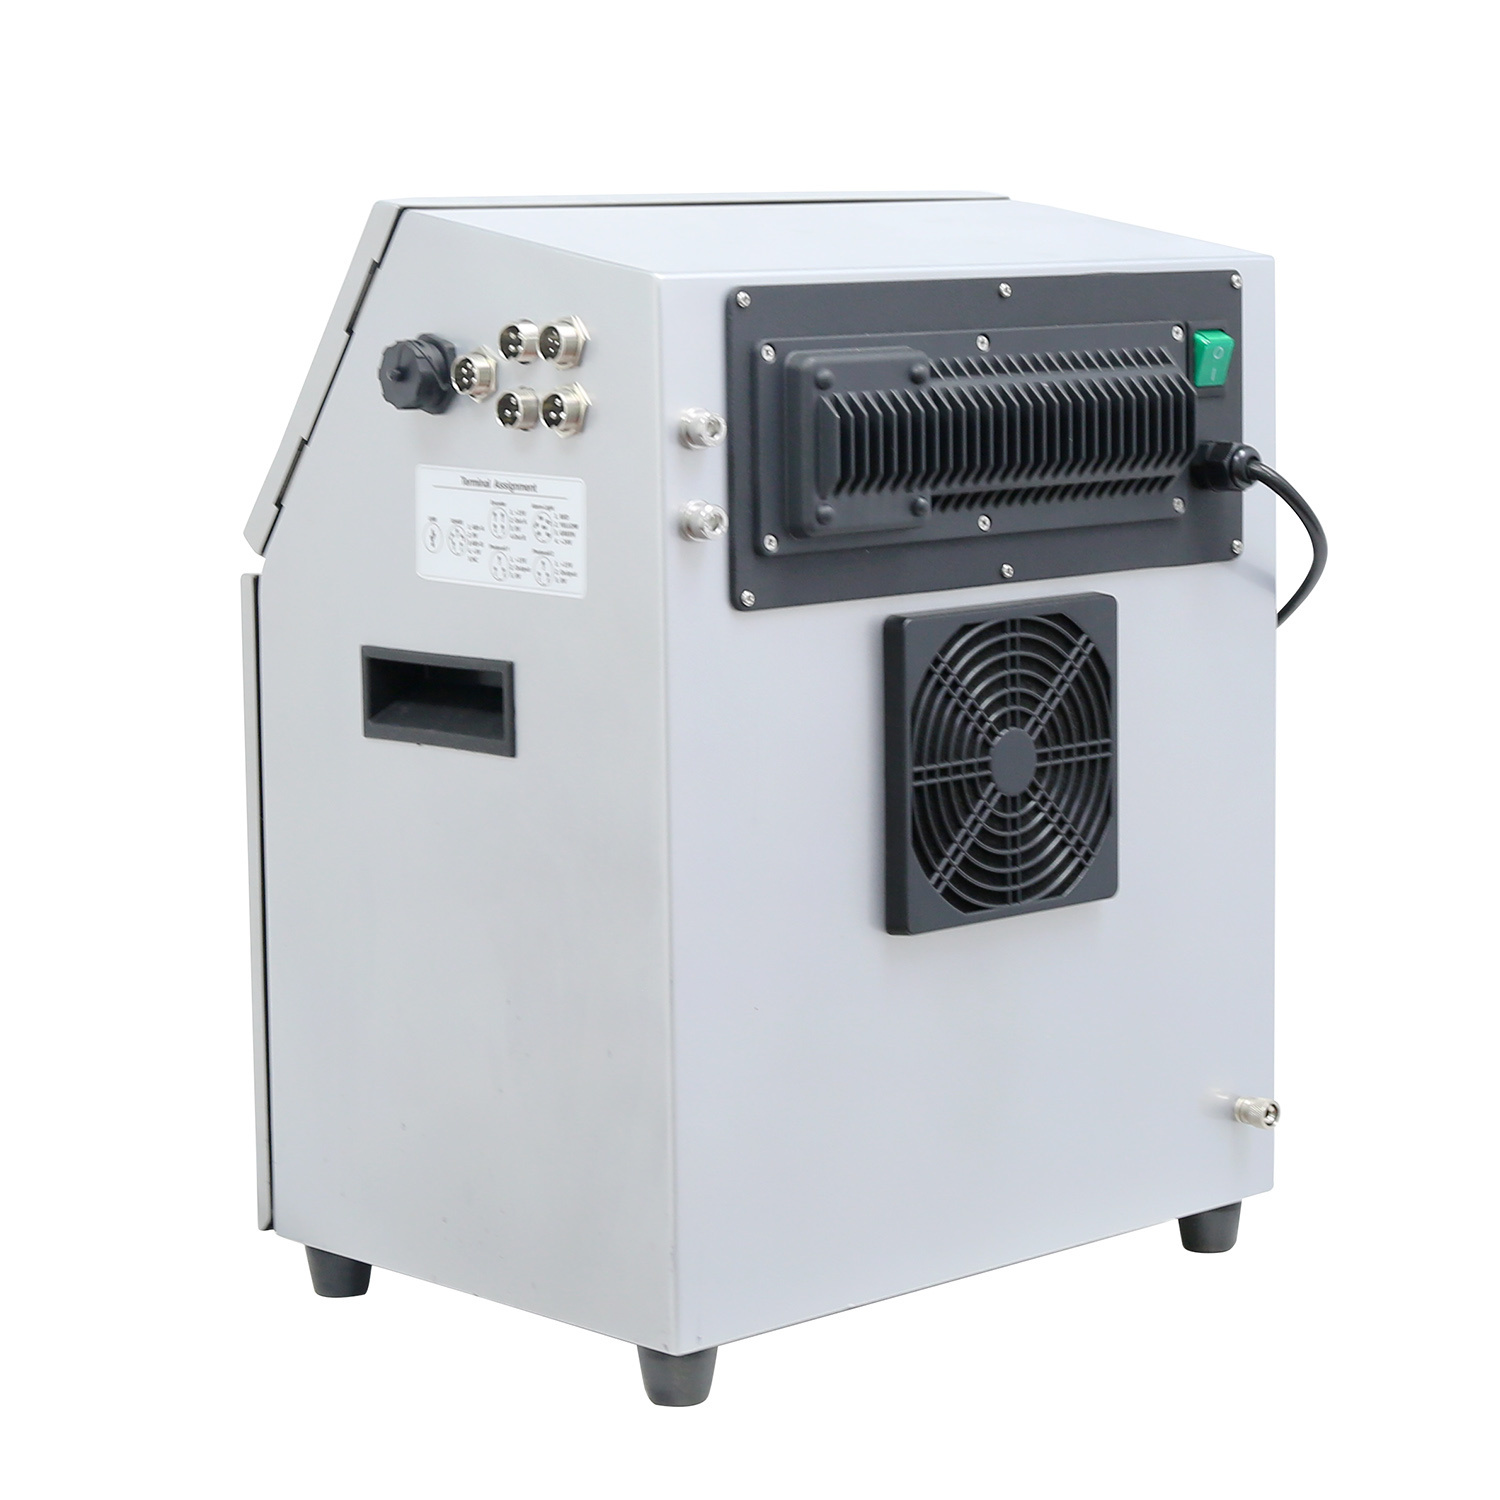 Leadtech Lt800 Printing Machine Cij Printer